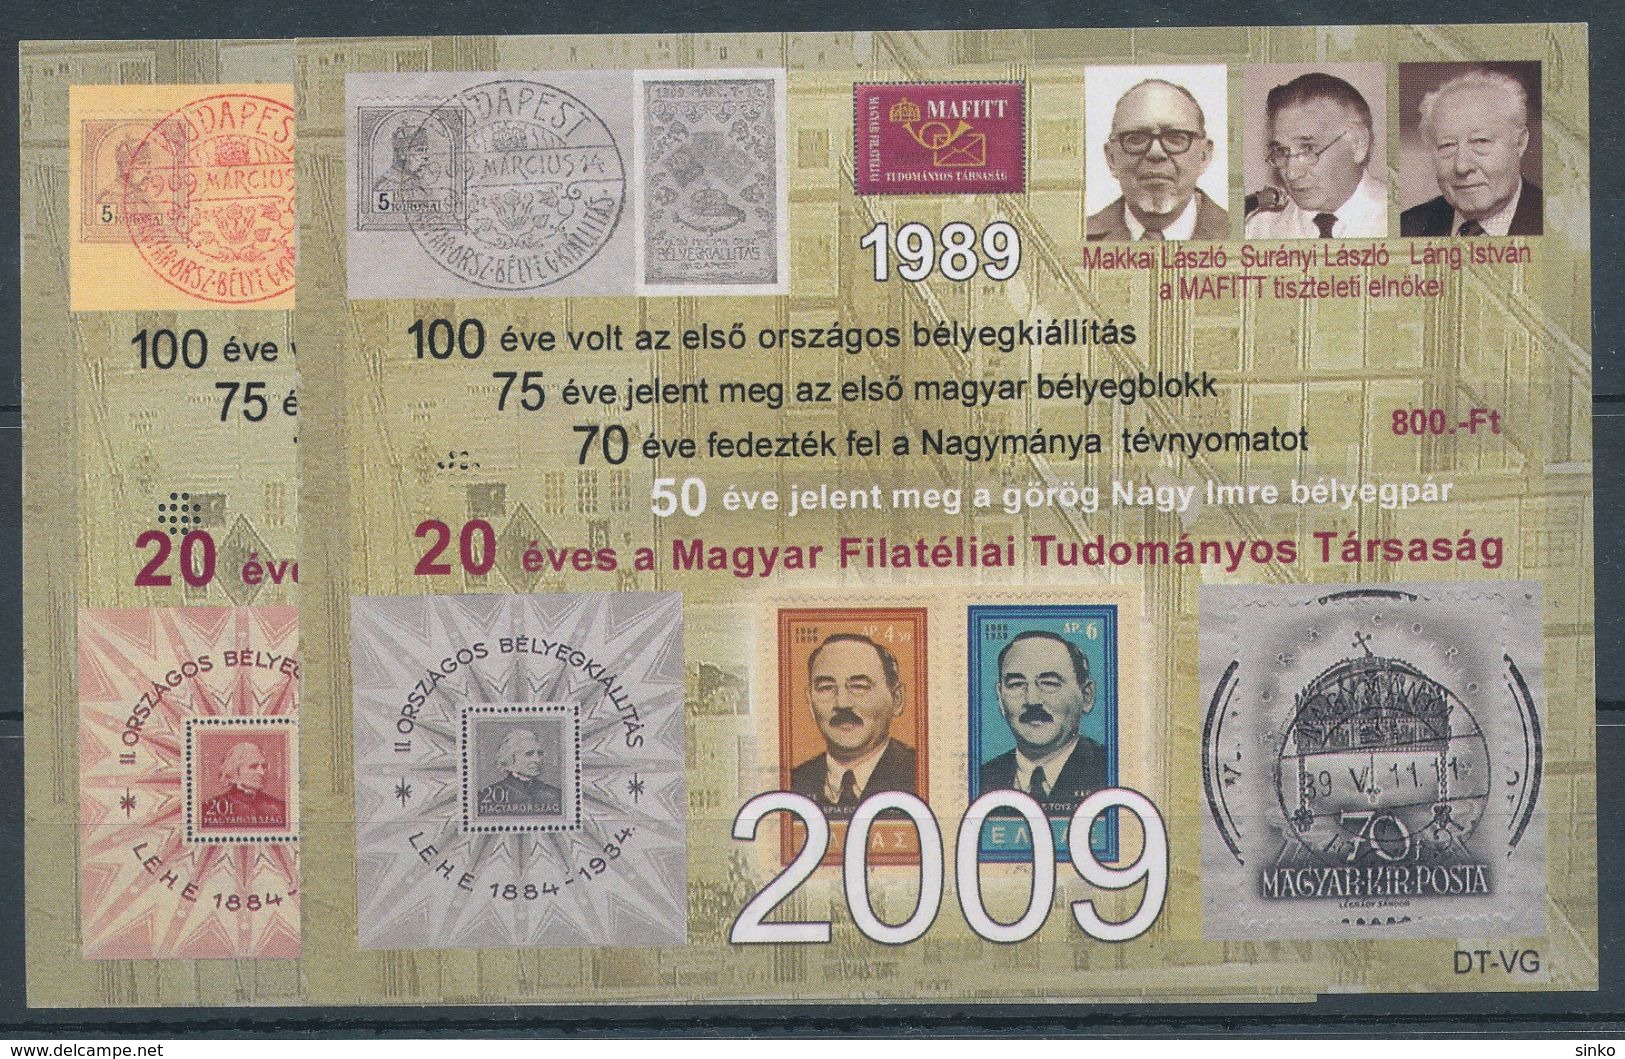 2009/53. The Hungarian Scientific Society For Philatelic Research Is 20 Years Old - Commemorative Sheet - Foglietto Ricordo